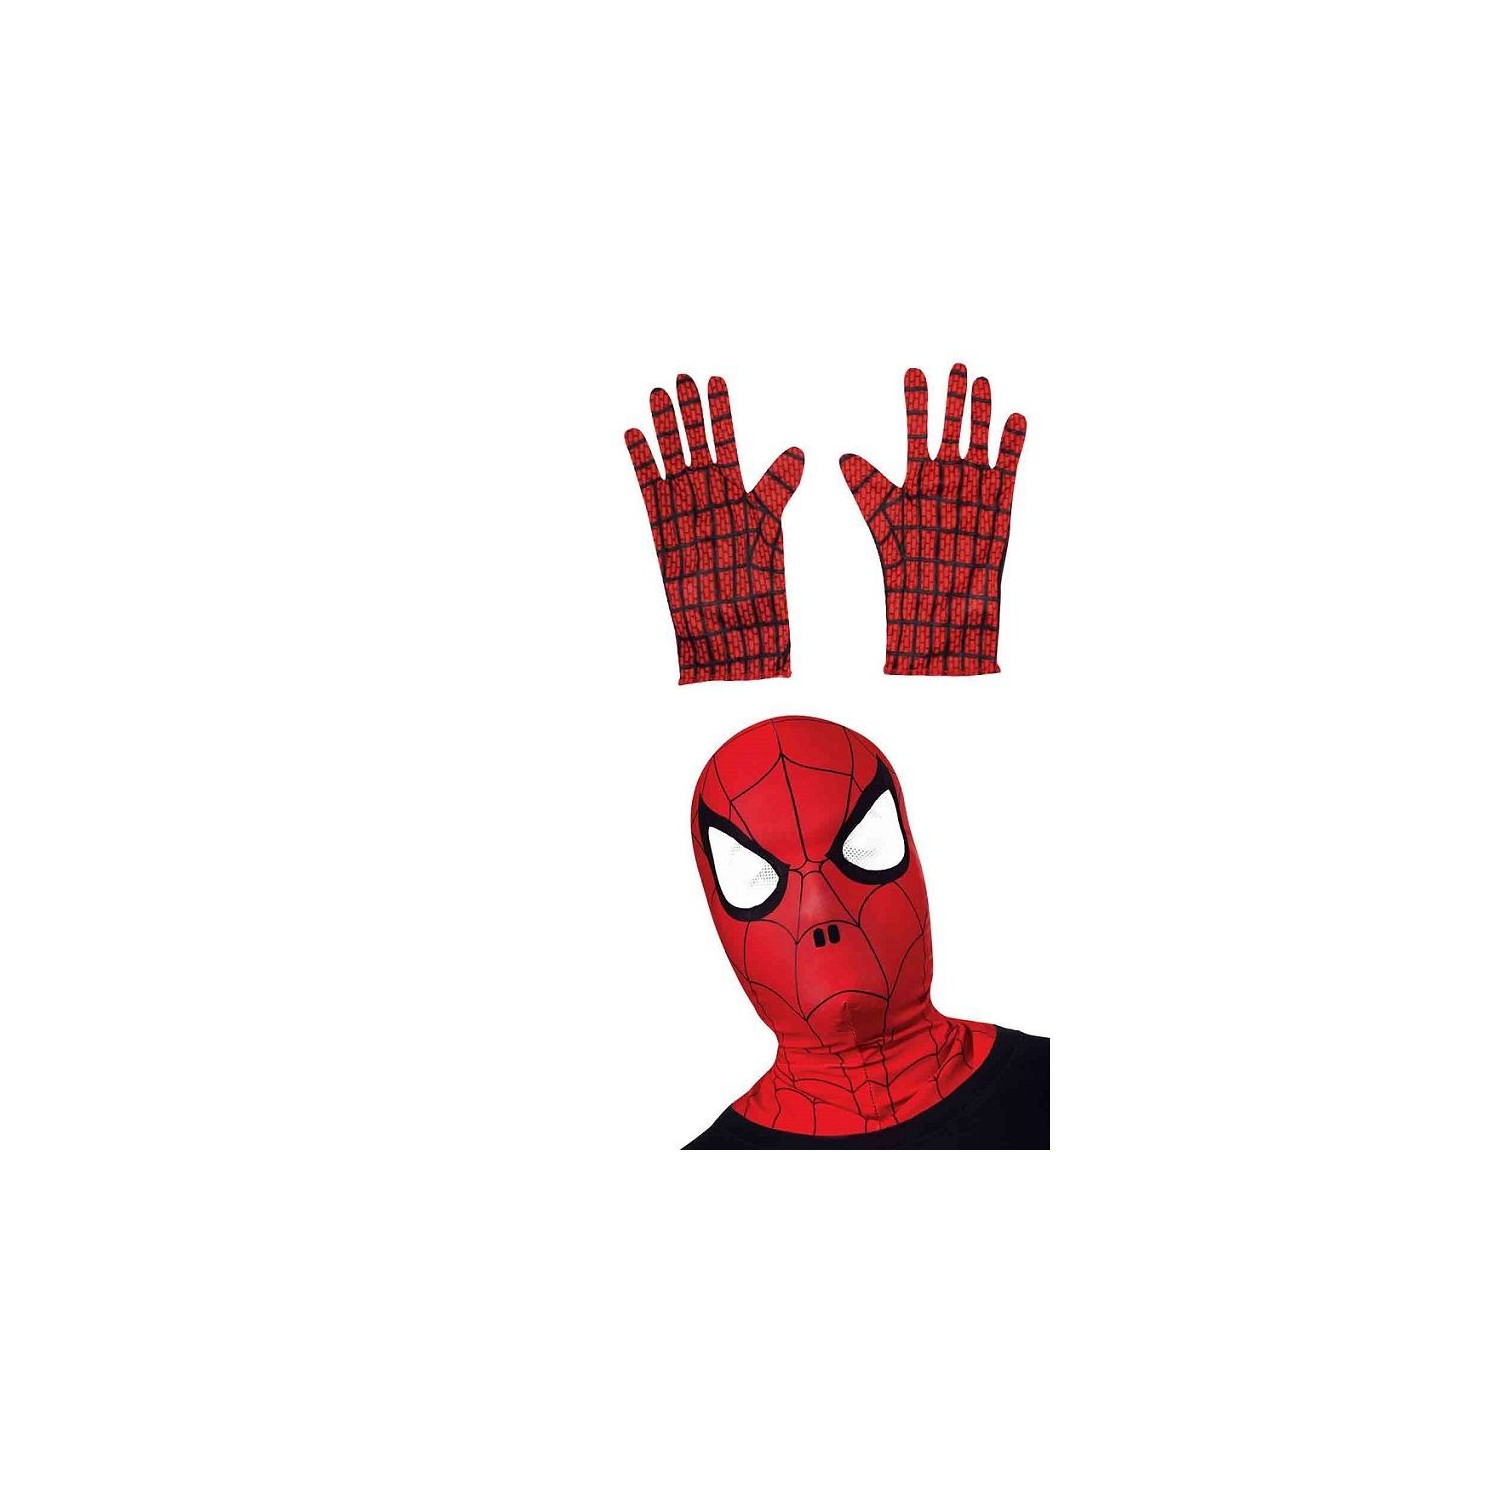 Kit Spider-man gants et cagoule